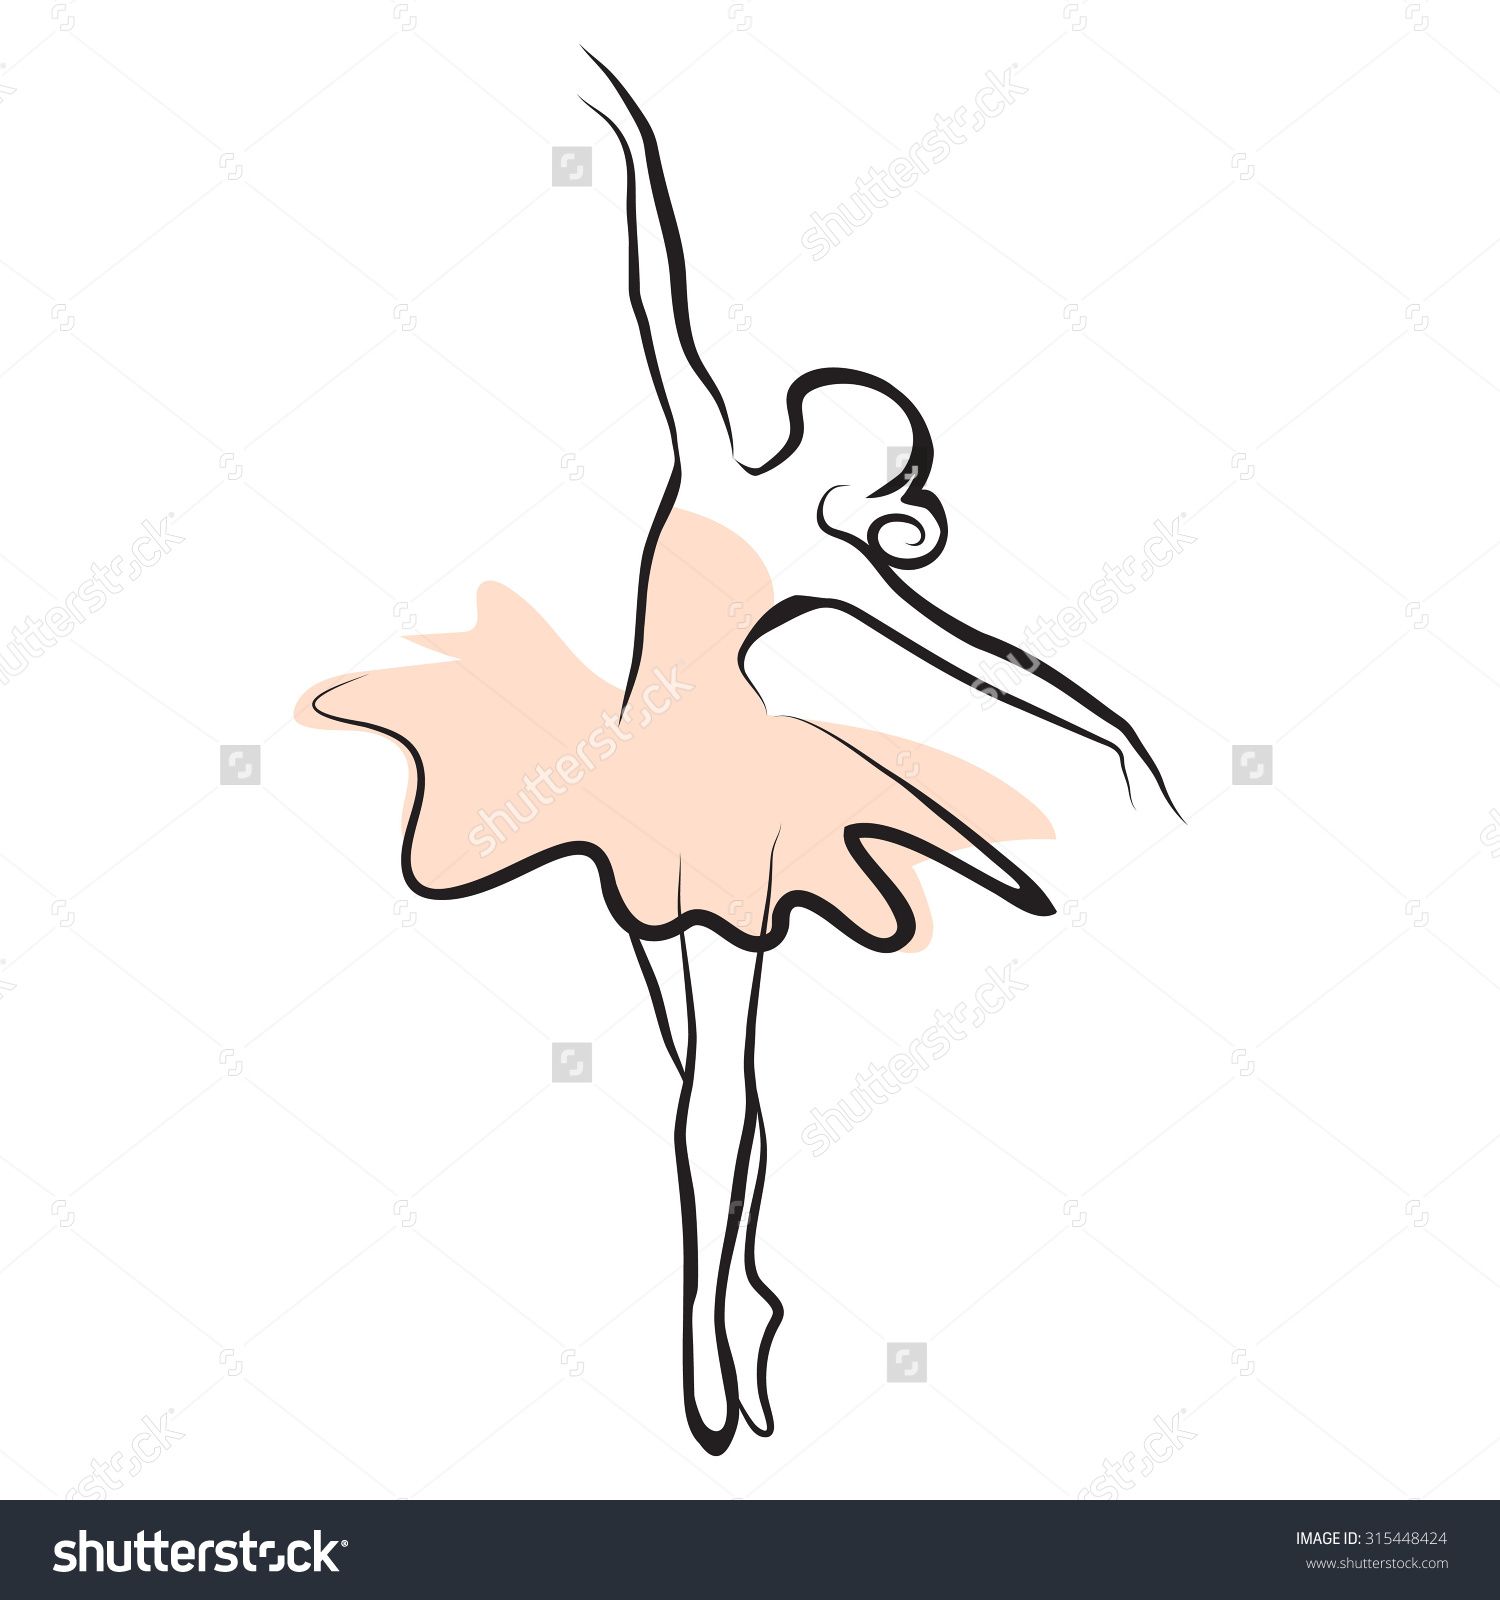 Vector illustration of classical ballet, figure ballet